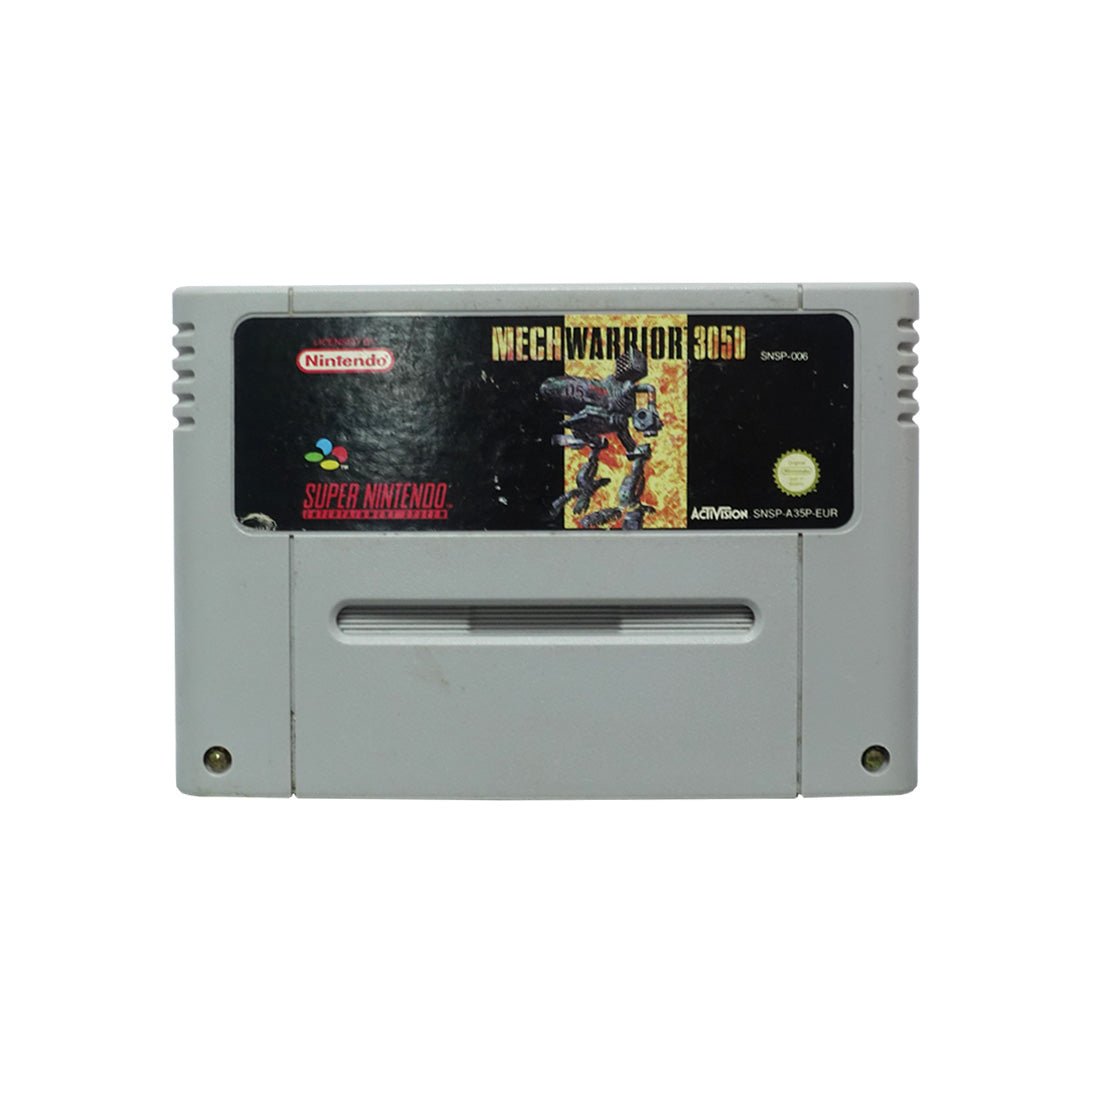 (Pre-Owned) Mech Warrior 3050 - Super Nintendo Entertainment System - ريترو - Store 974 | ستور ٩٧٤